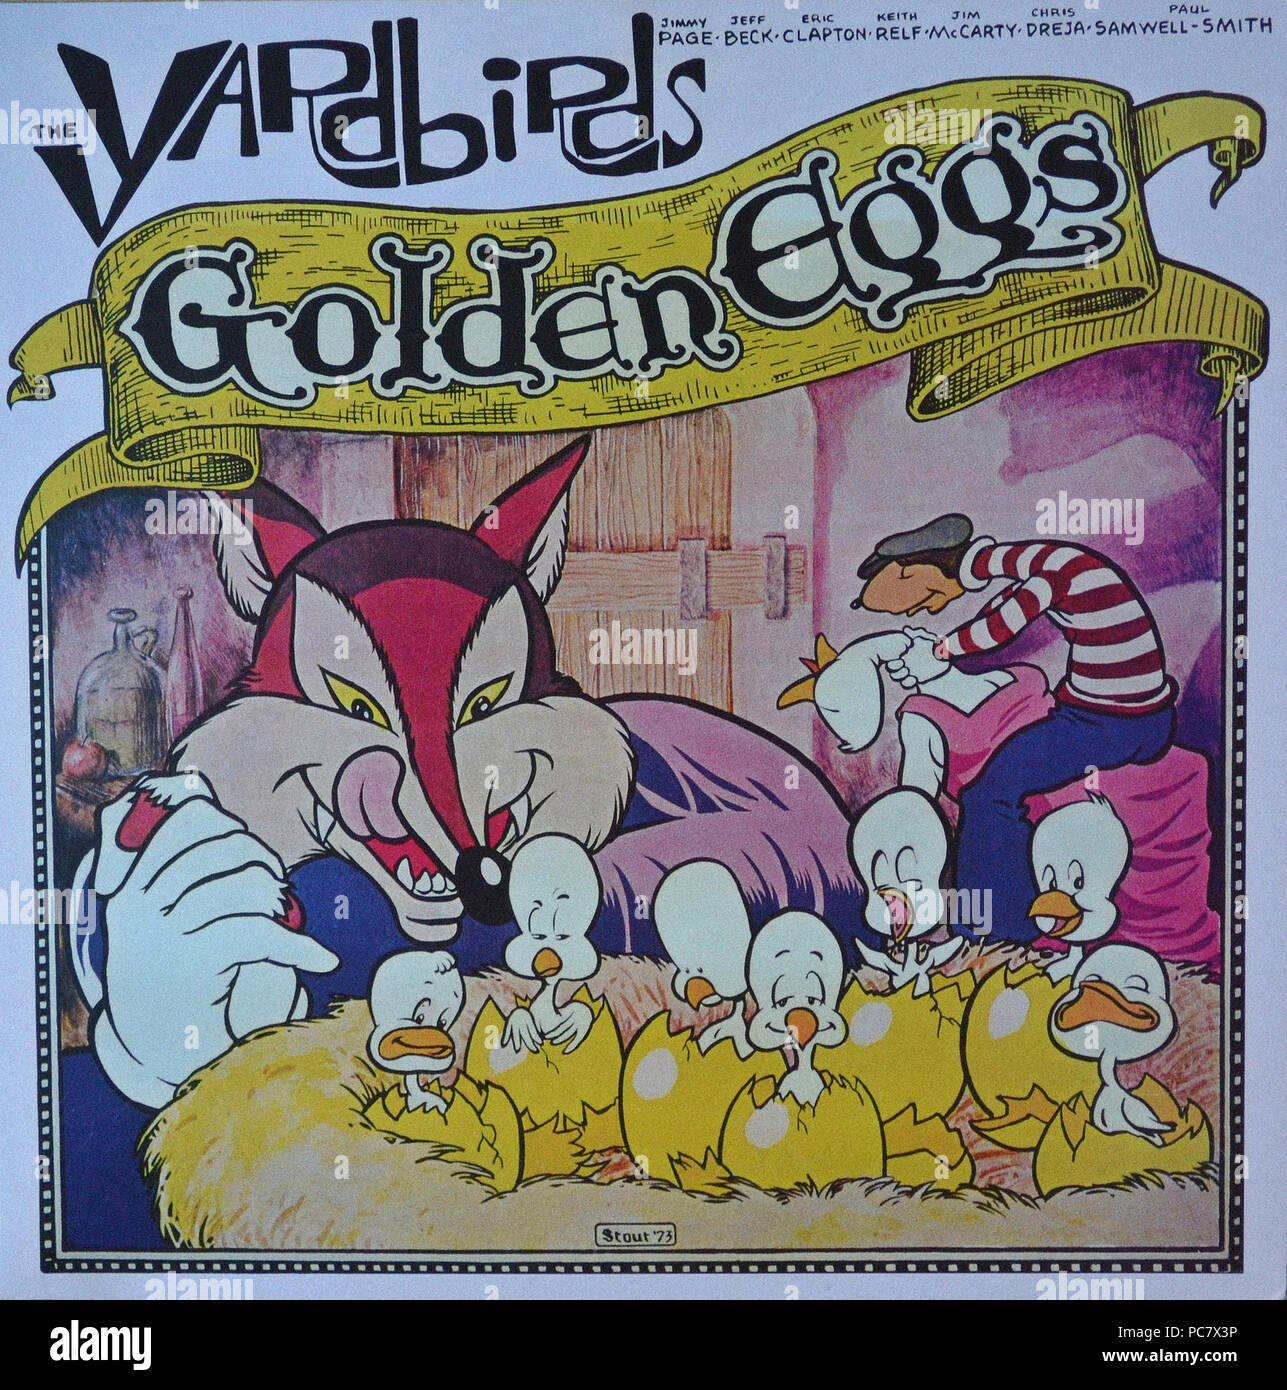 The Yardbirds Golden Eggs Vintage Vinyl Album Cover Stock Photo Alamy